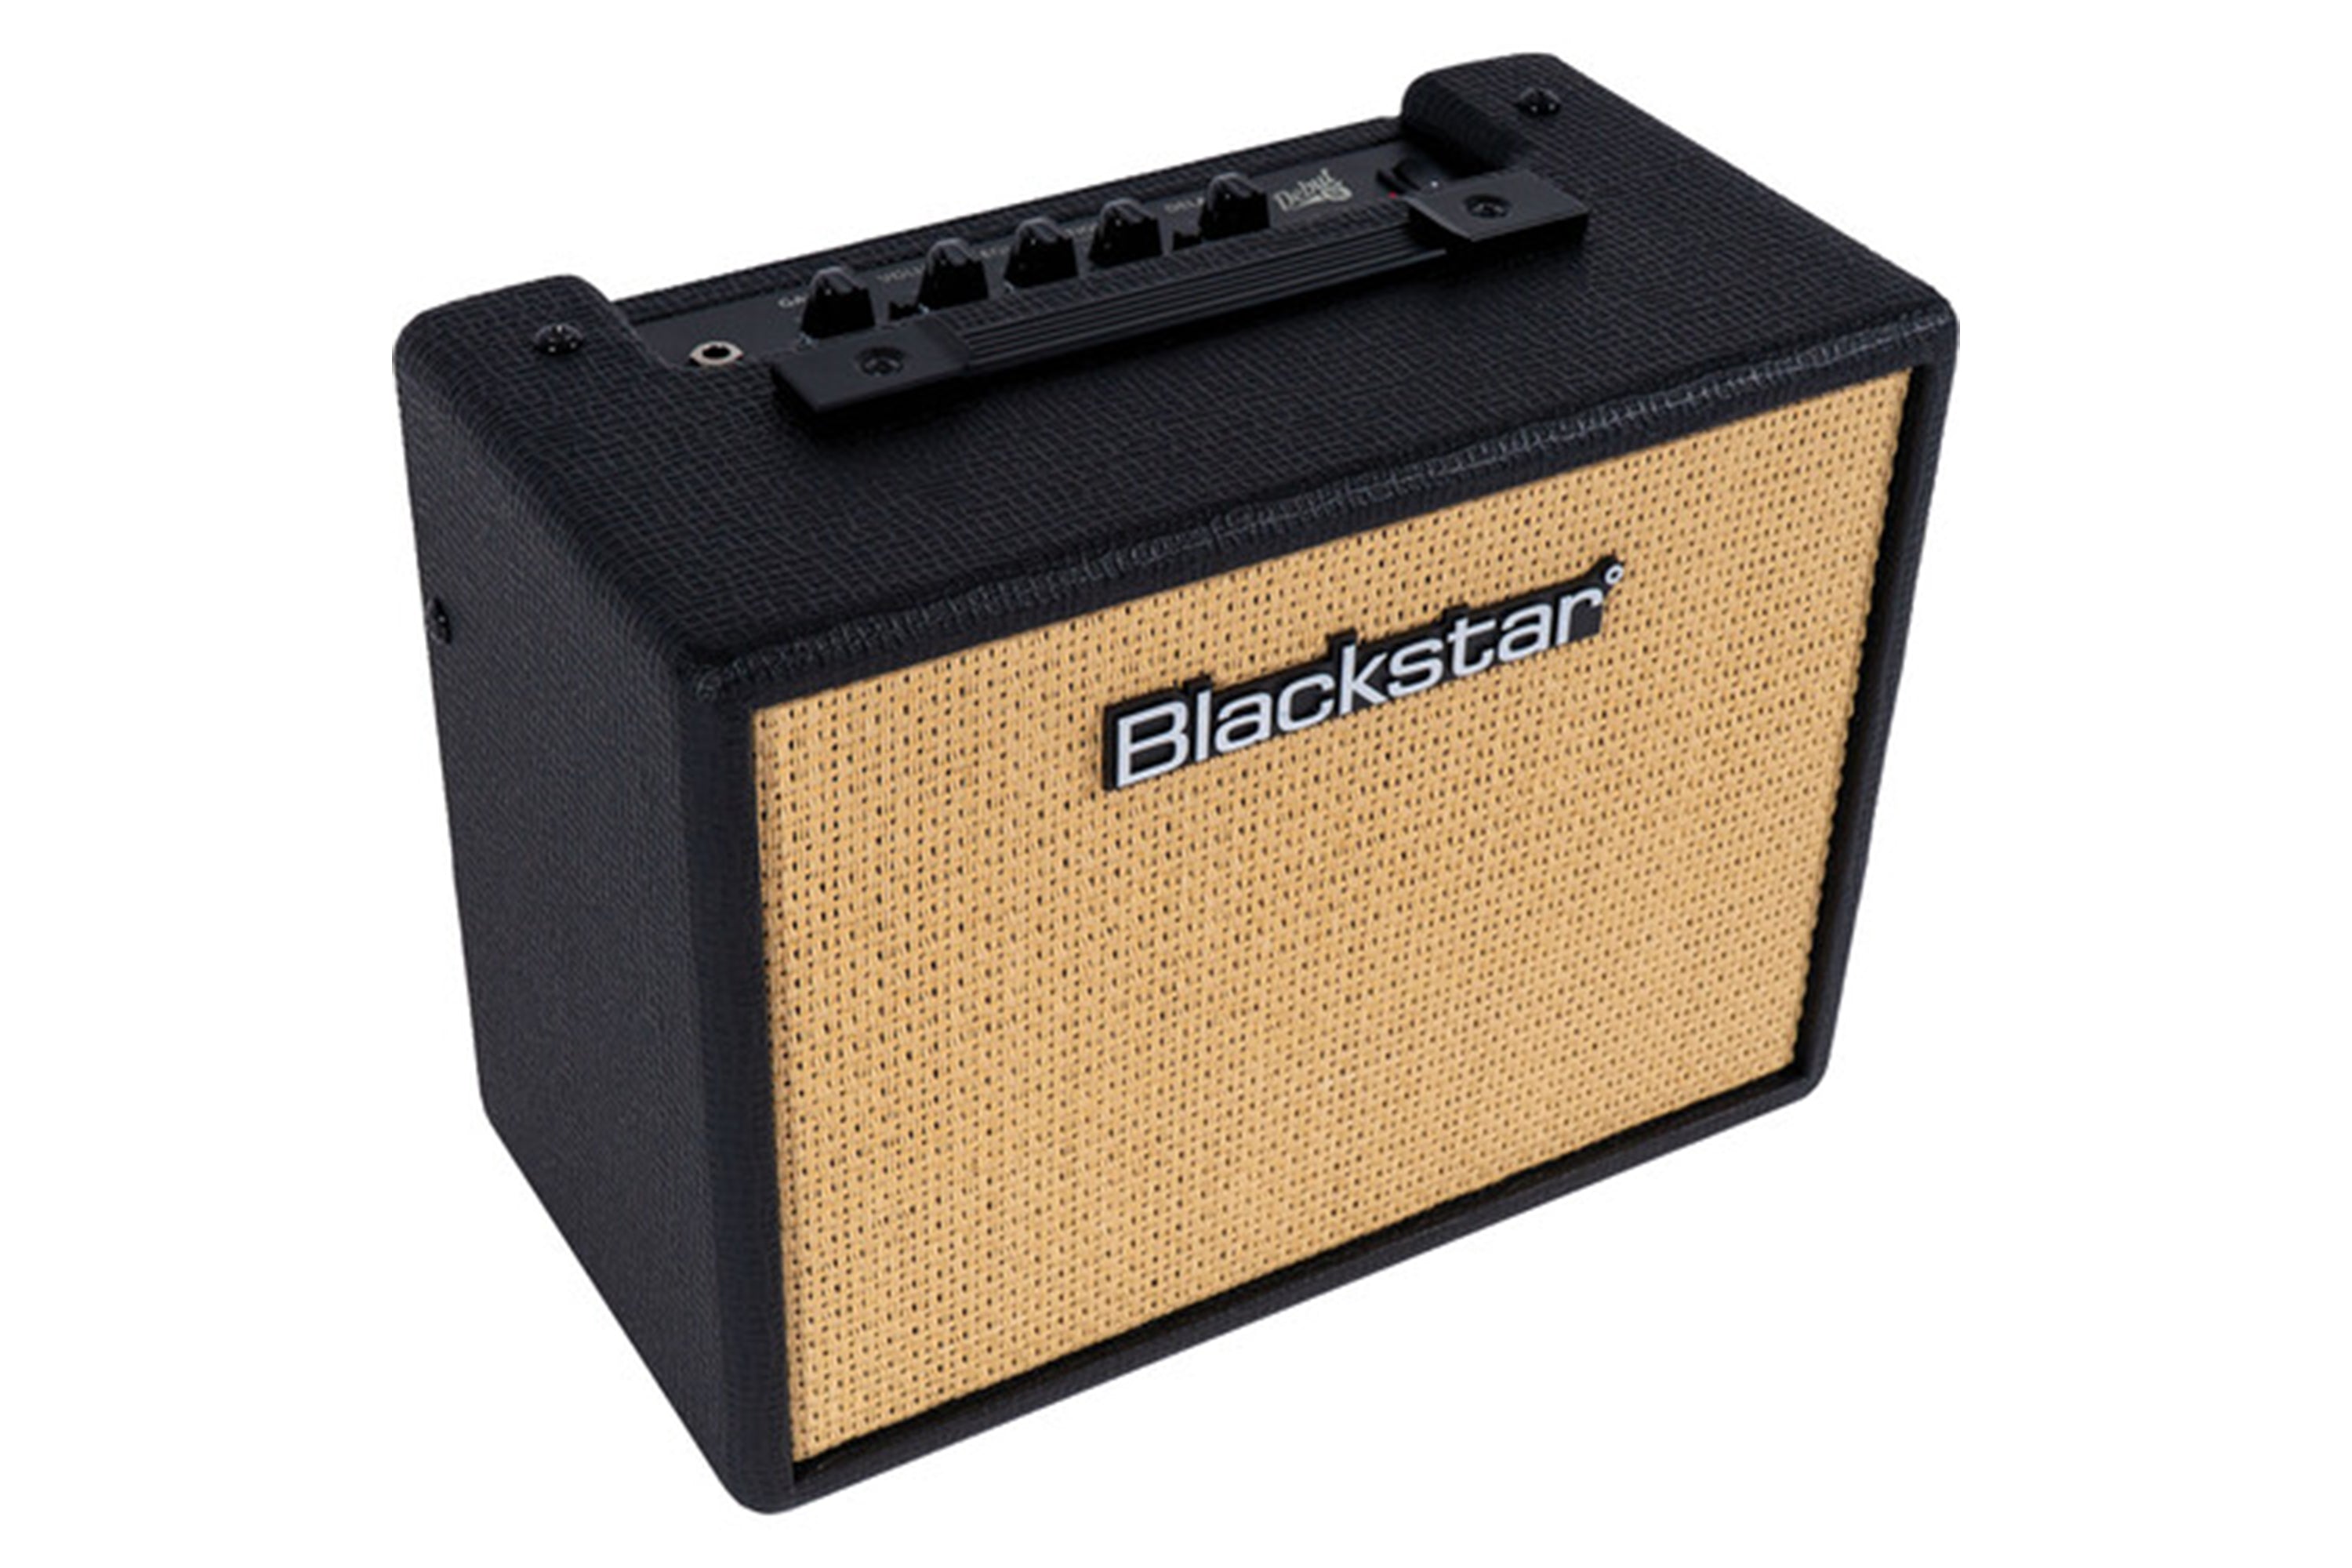 Blackstar Debut 15E 15-Watt Combo Practice Amp with FX - Black - Open Box